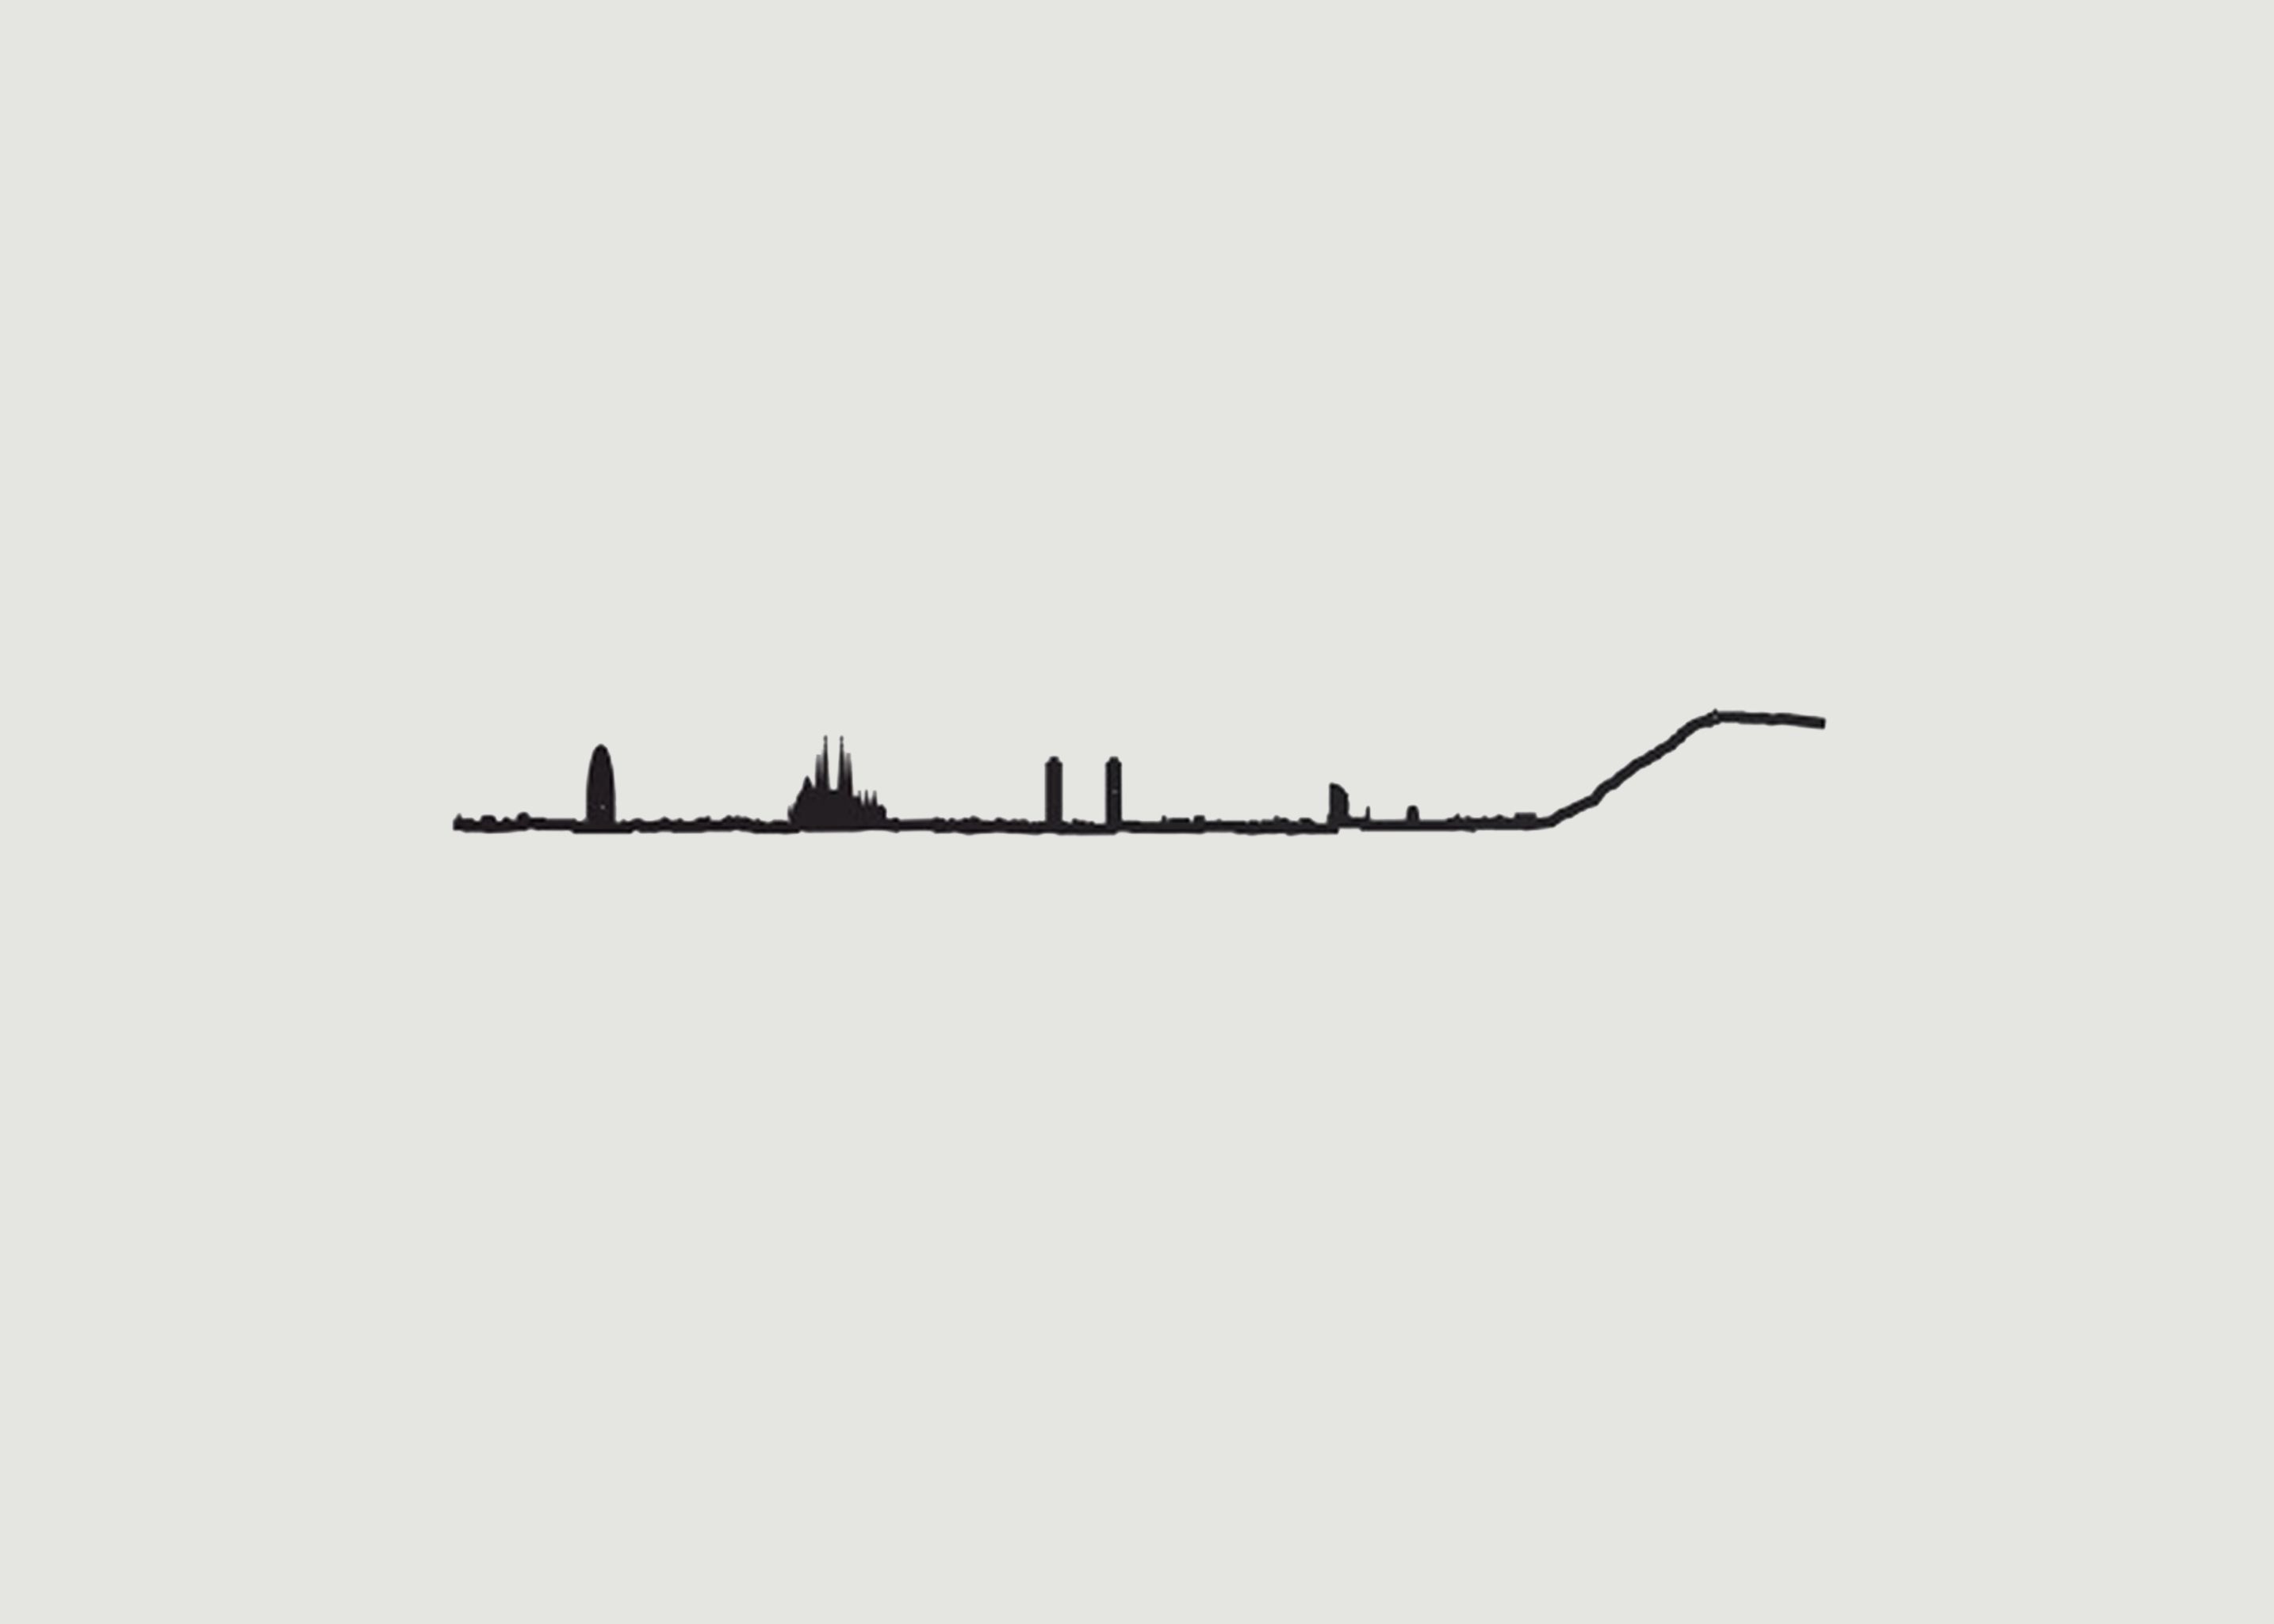 Barcelona silhouette - The Line